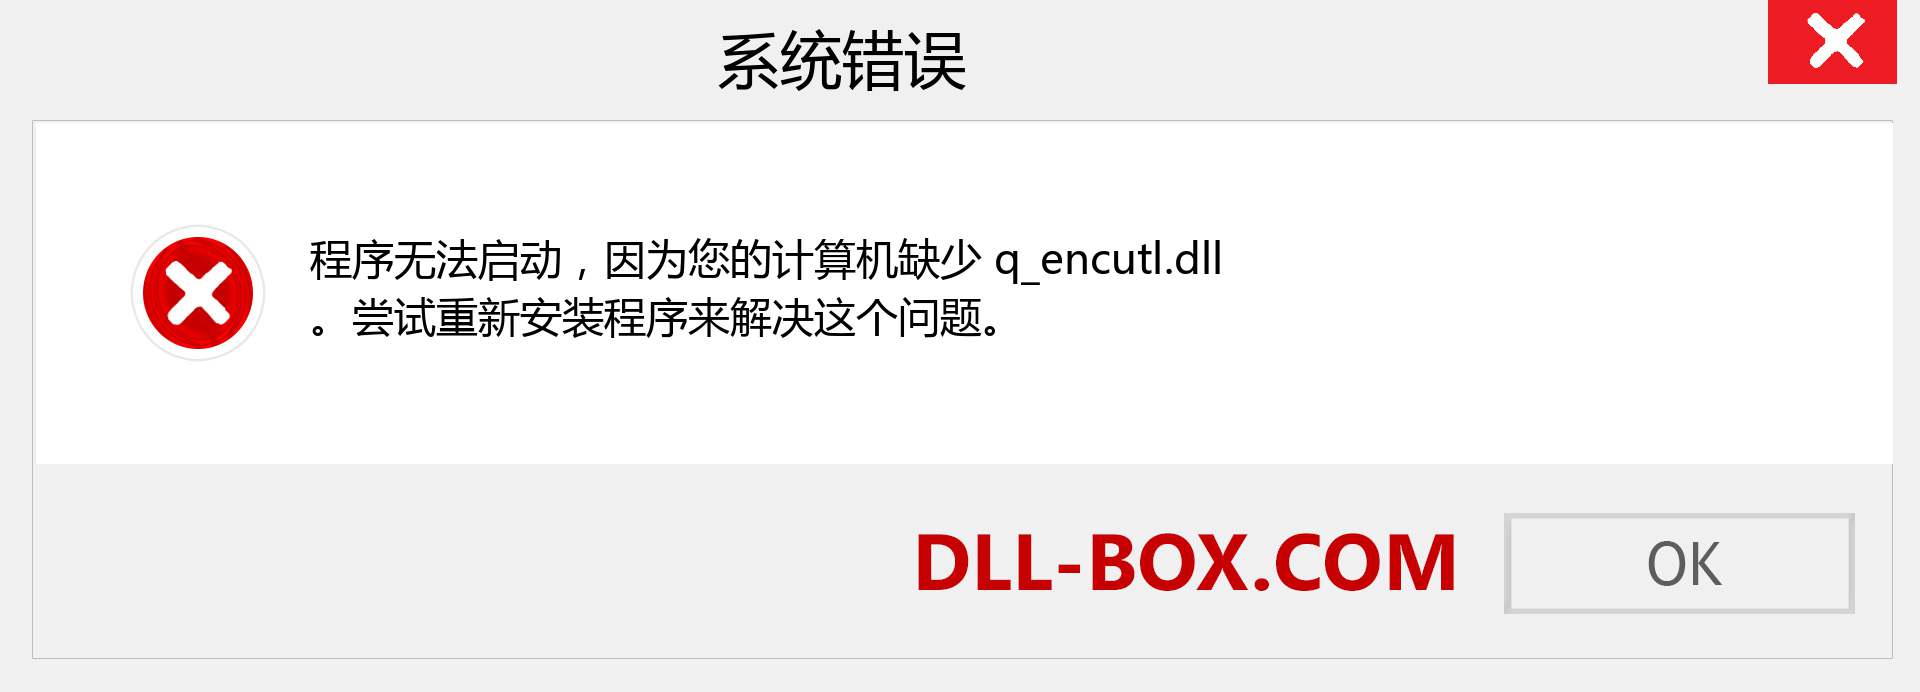 q_encutl.dll 文件丢失？。 适用于 Windows 7、8、10 的下载 - 修复 Windows、照片、图像上的 q_encutl dll 丢失错误